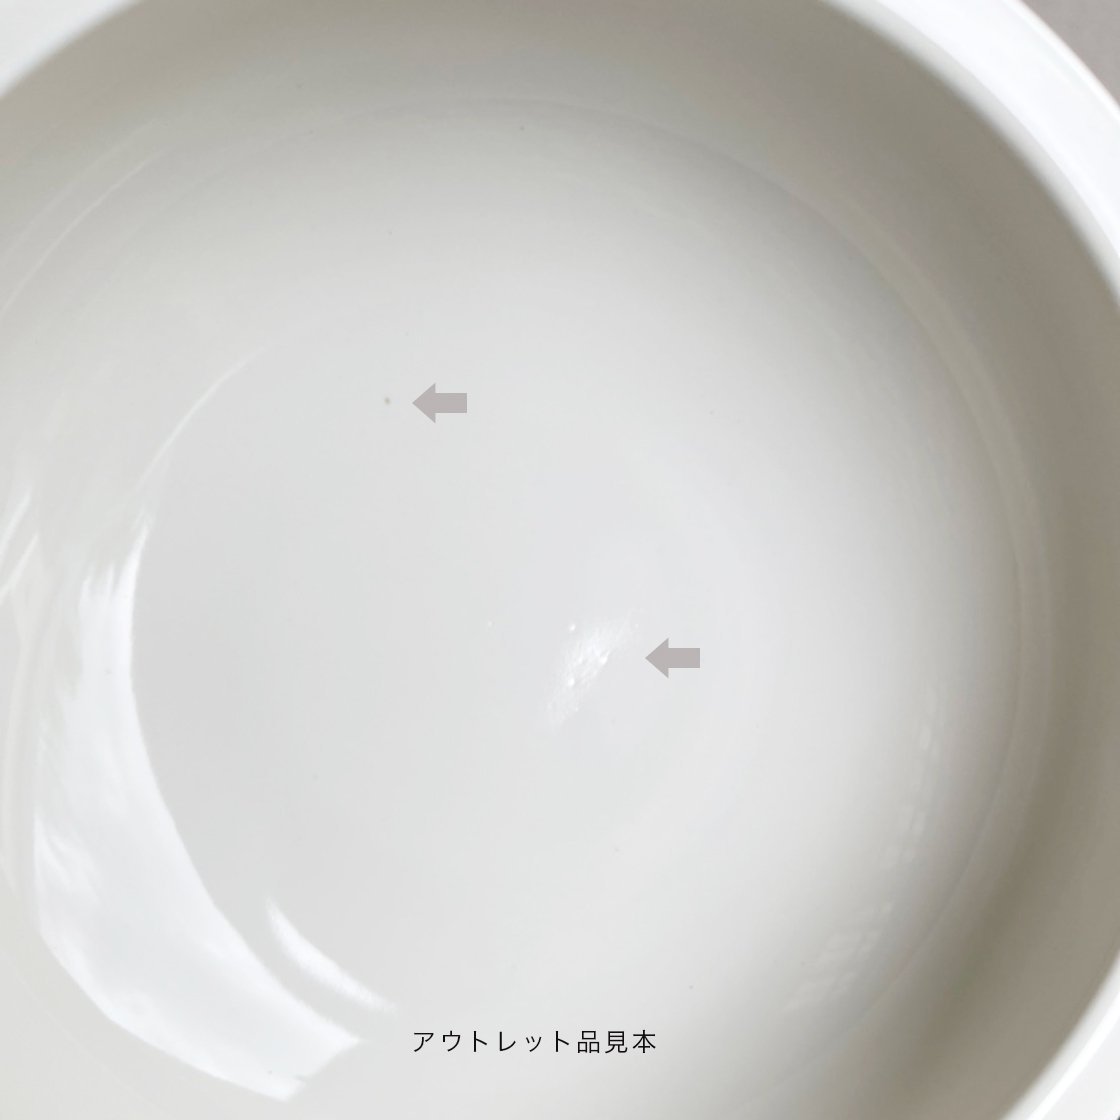 Classy Bowl【5インチ】白磁 Made in Japan